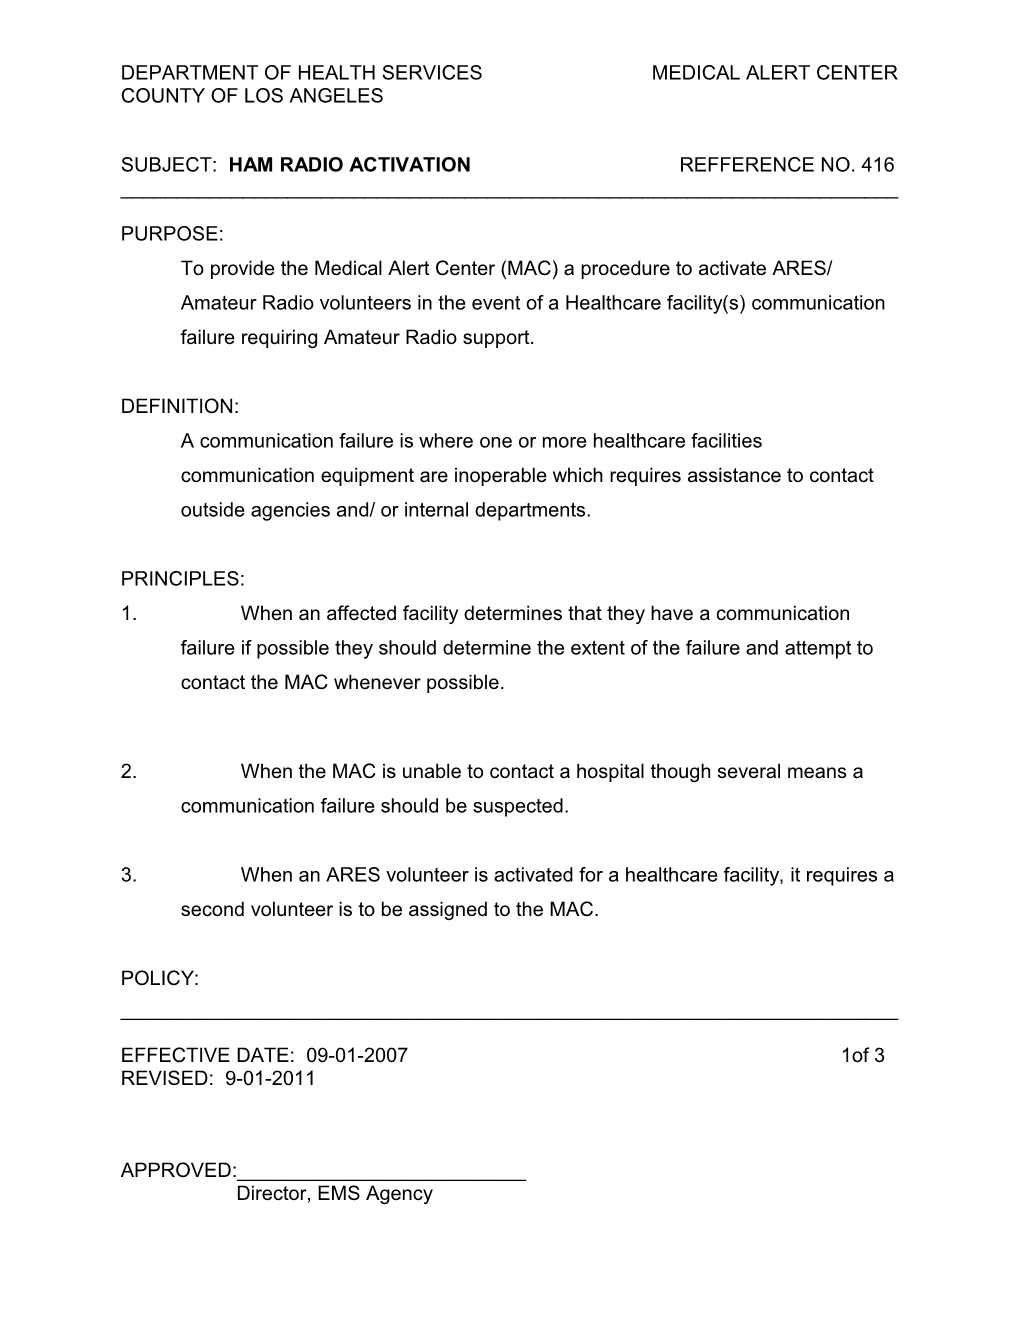 Subject: Ham Radio Activation Reference No. 416